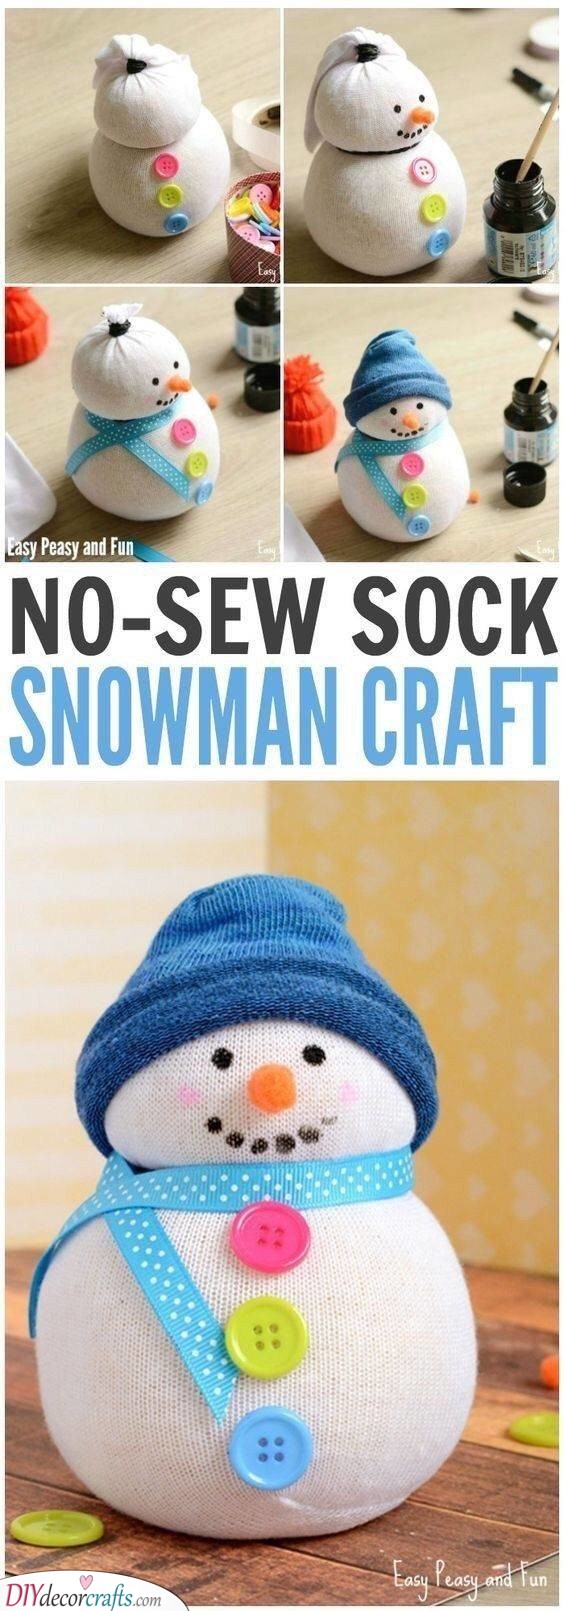 No-Sew Sock Craft - Snowman Decor